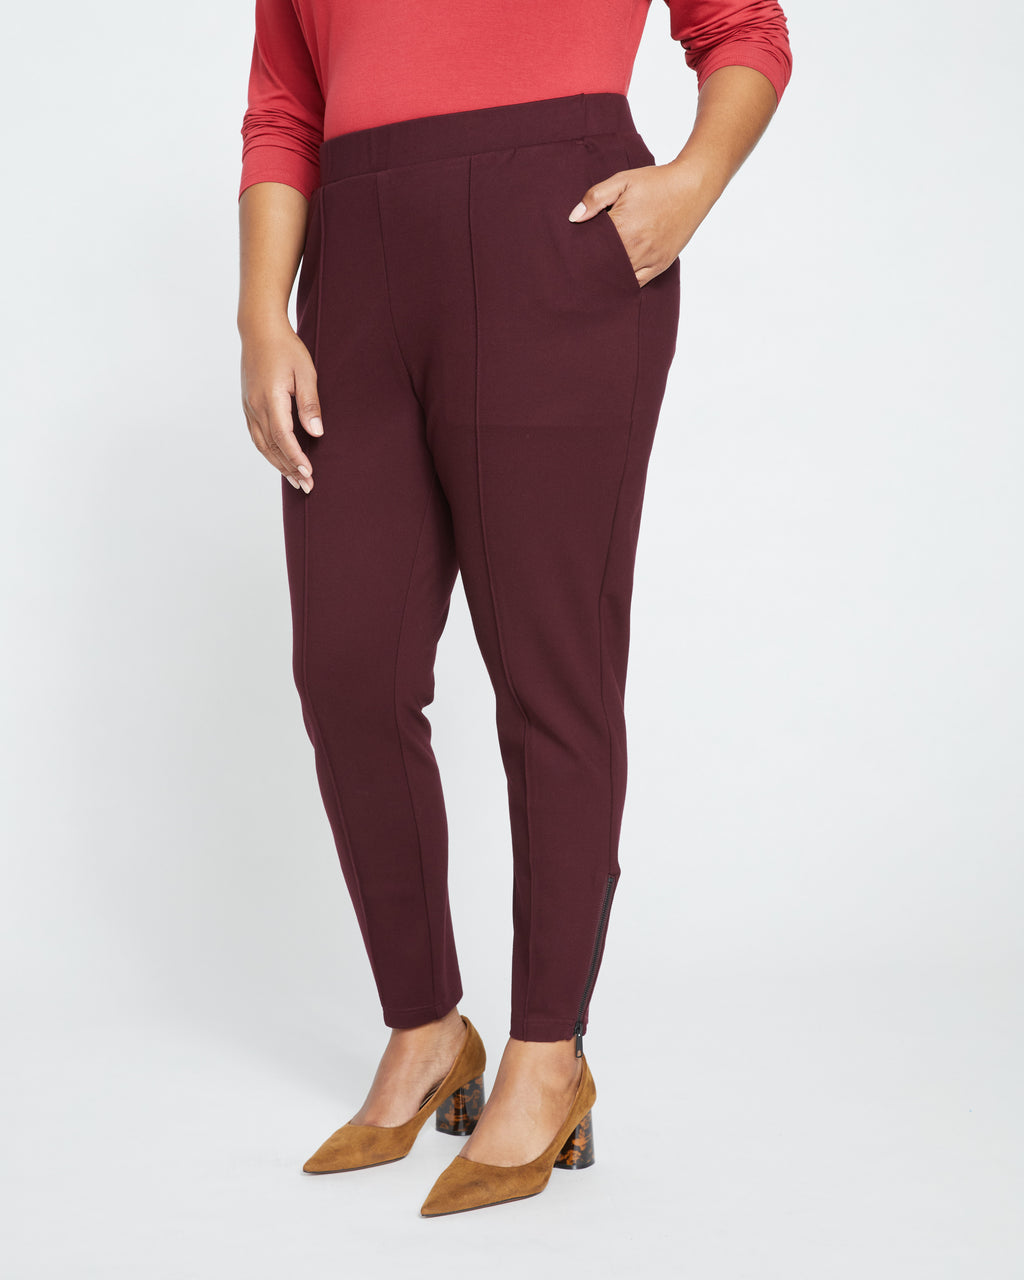 Terra & Sky Women's Plus Size Skinny Ponte Pants - Black, 2X at